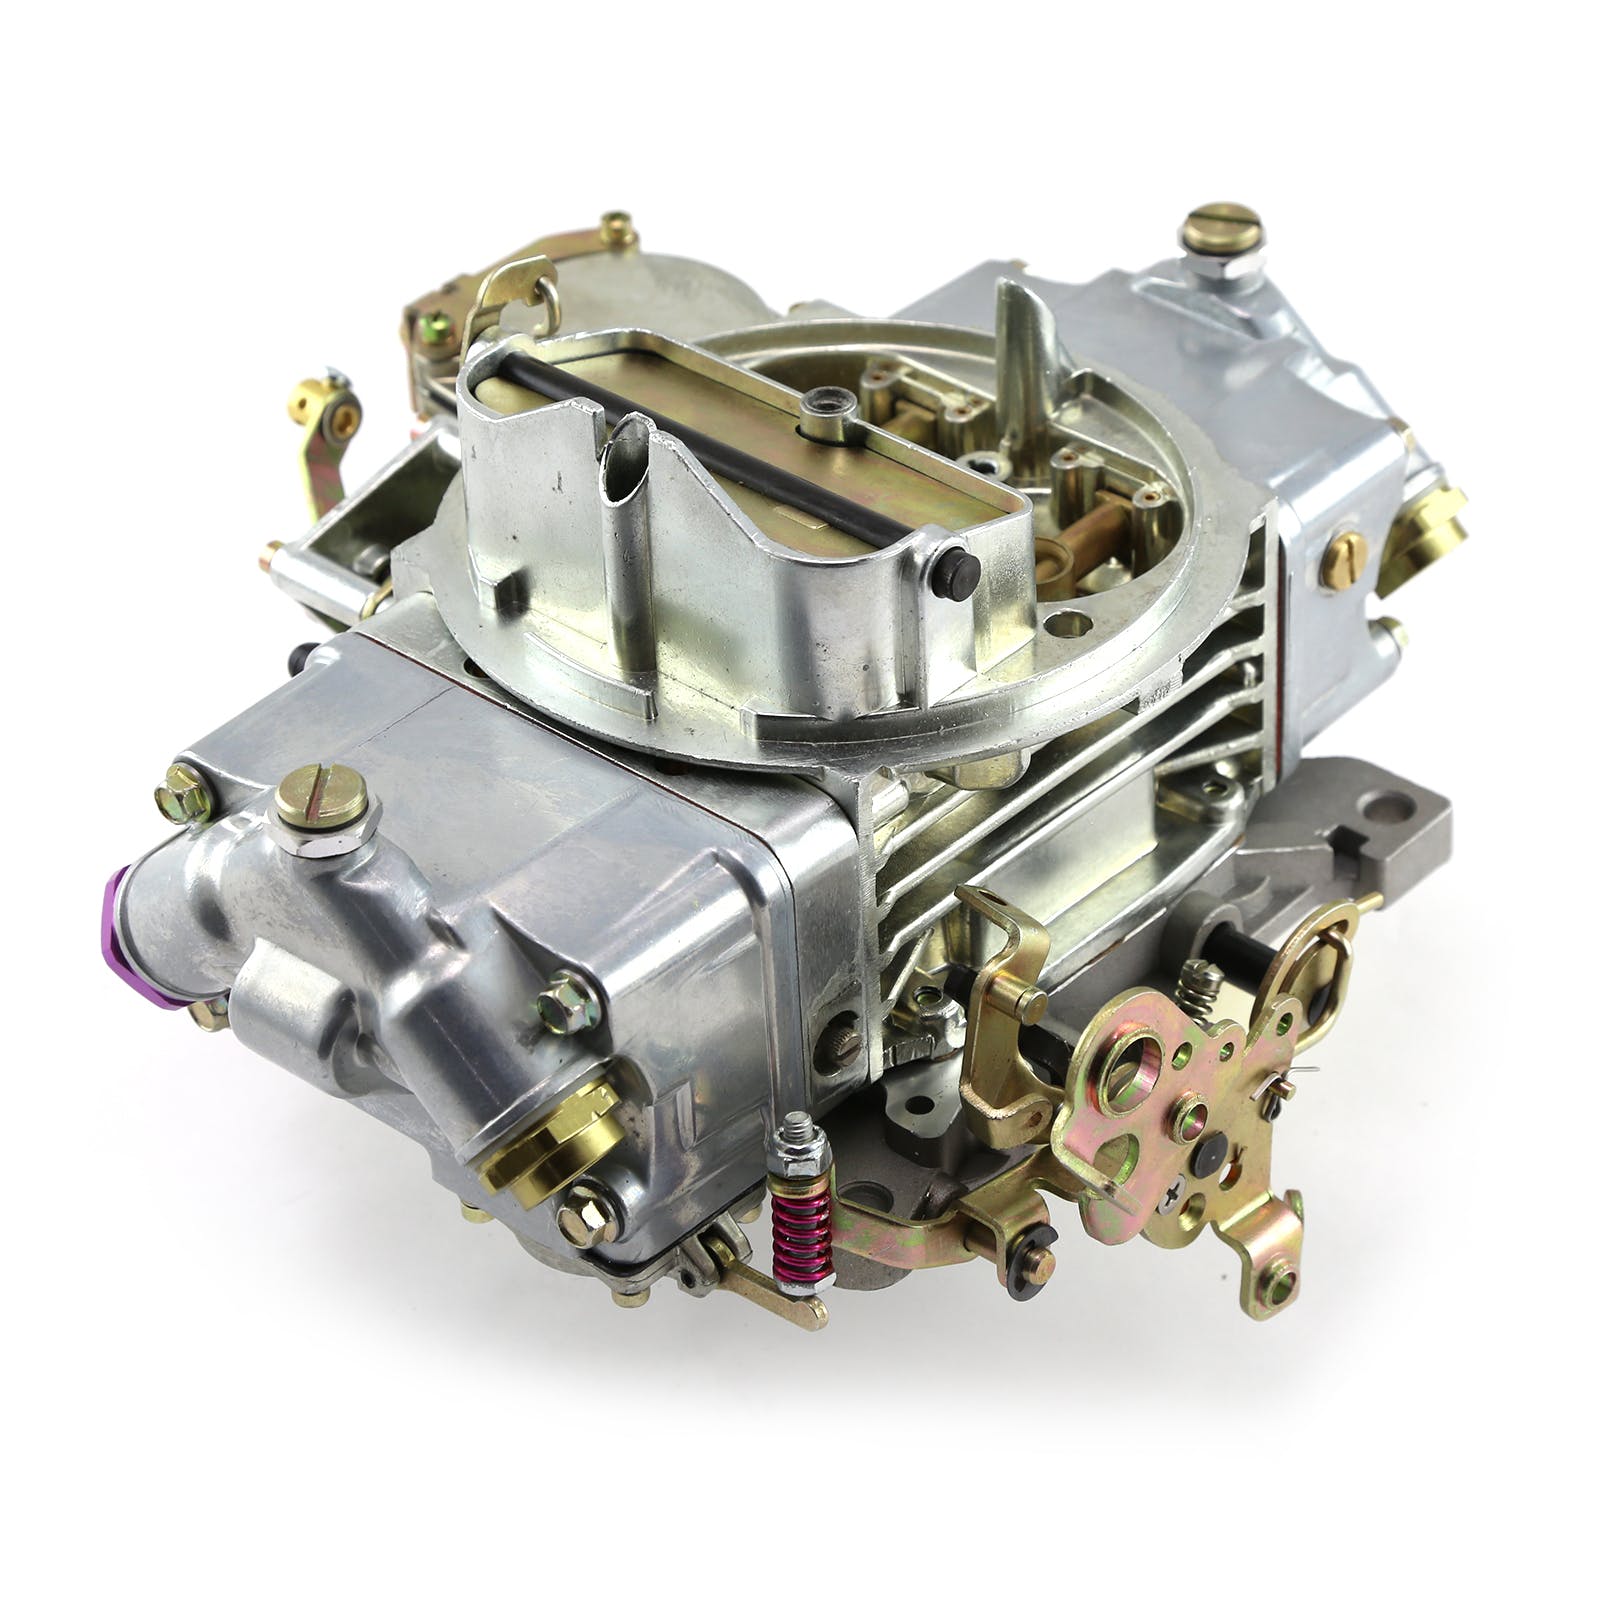 Speedmaster PCE121.1023 600 CFM Zinc-Chrome 4-Bbl Vacuum Secondary Carburetor Carb 7/8-20 Inlet